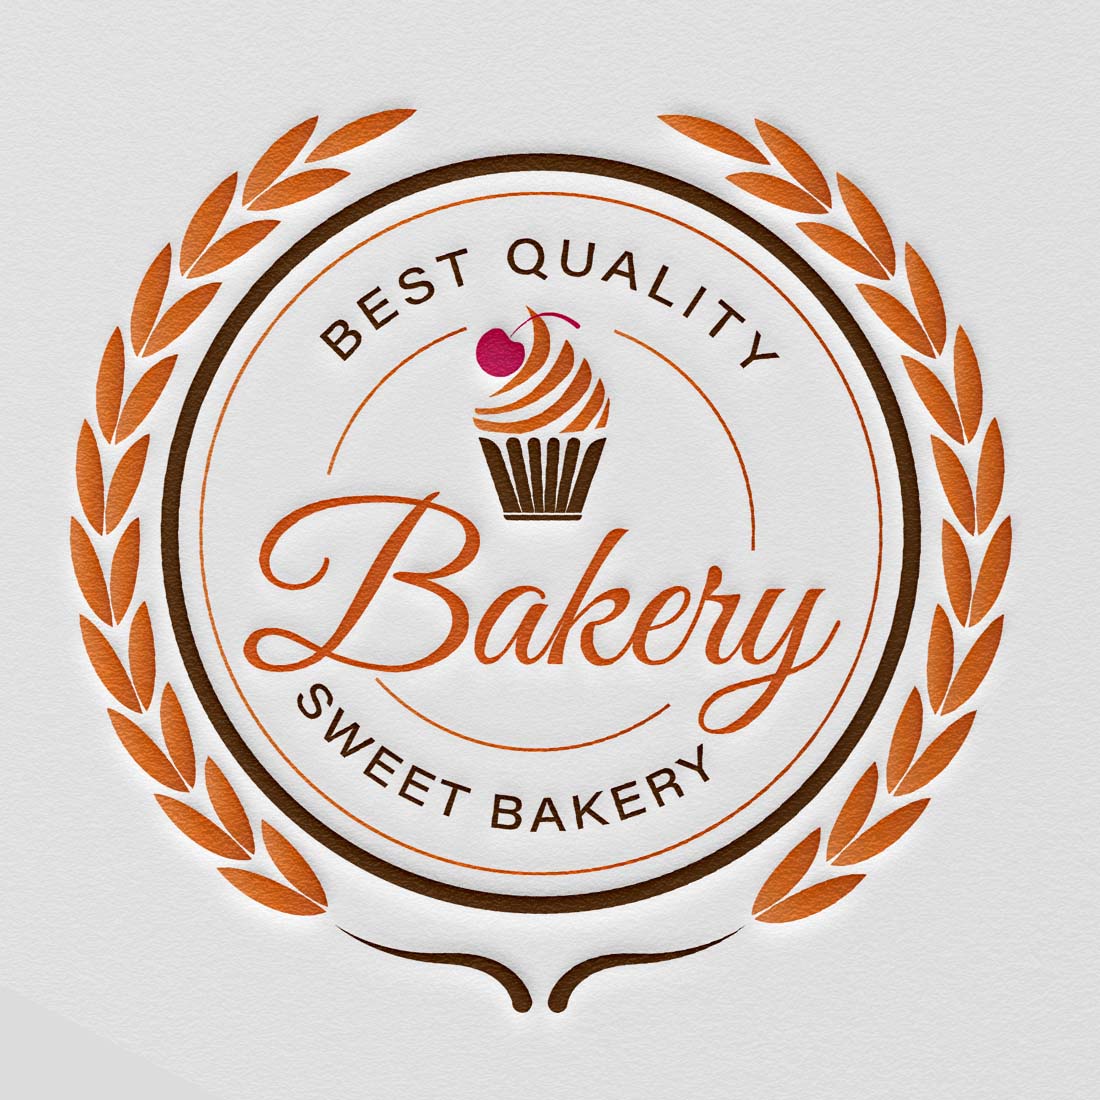 Prints of bakery logo design.